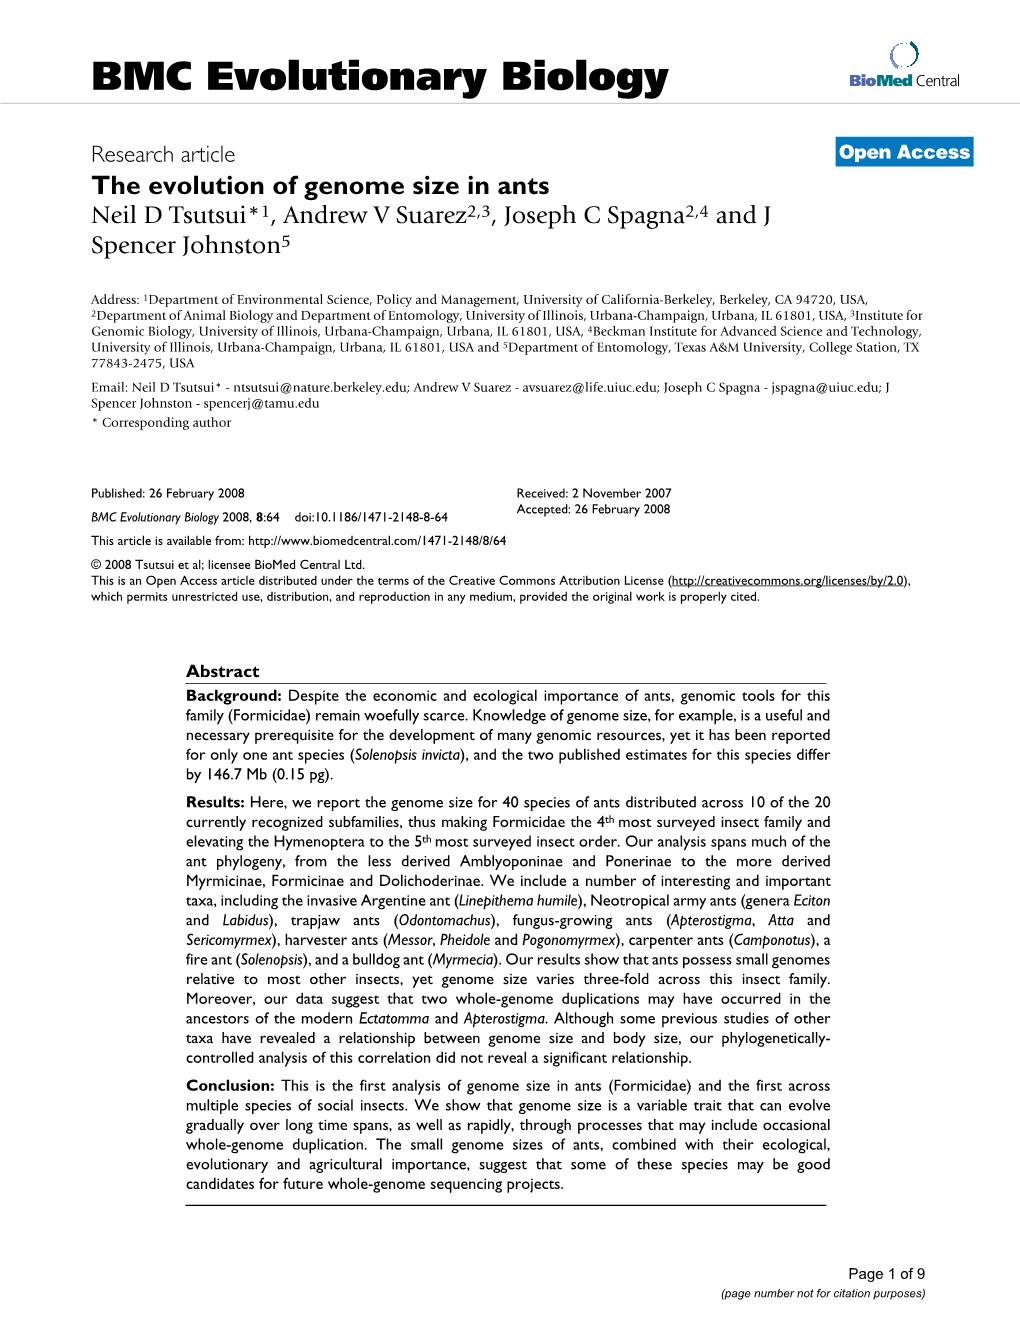 The Evolution of Genome Size in Ants Neil D Tsutsui*1, Andrew V Suarez2,3, Josephcspagna2,4 and J Spencer Johnston5